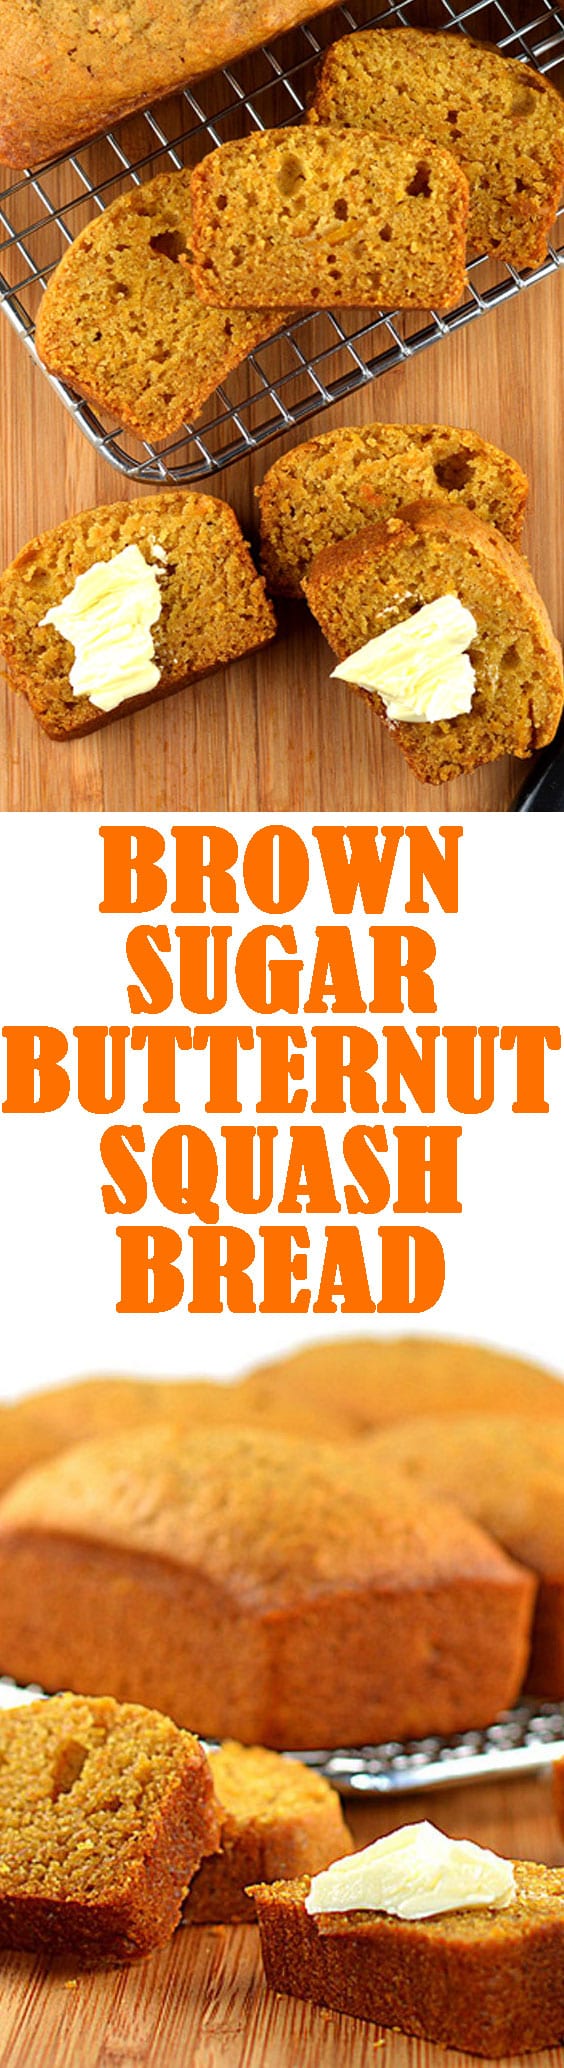 Brown Sugar Butternut Squash Bread